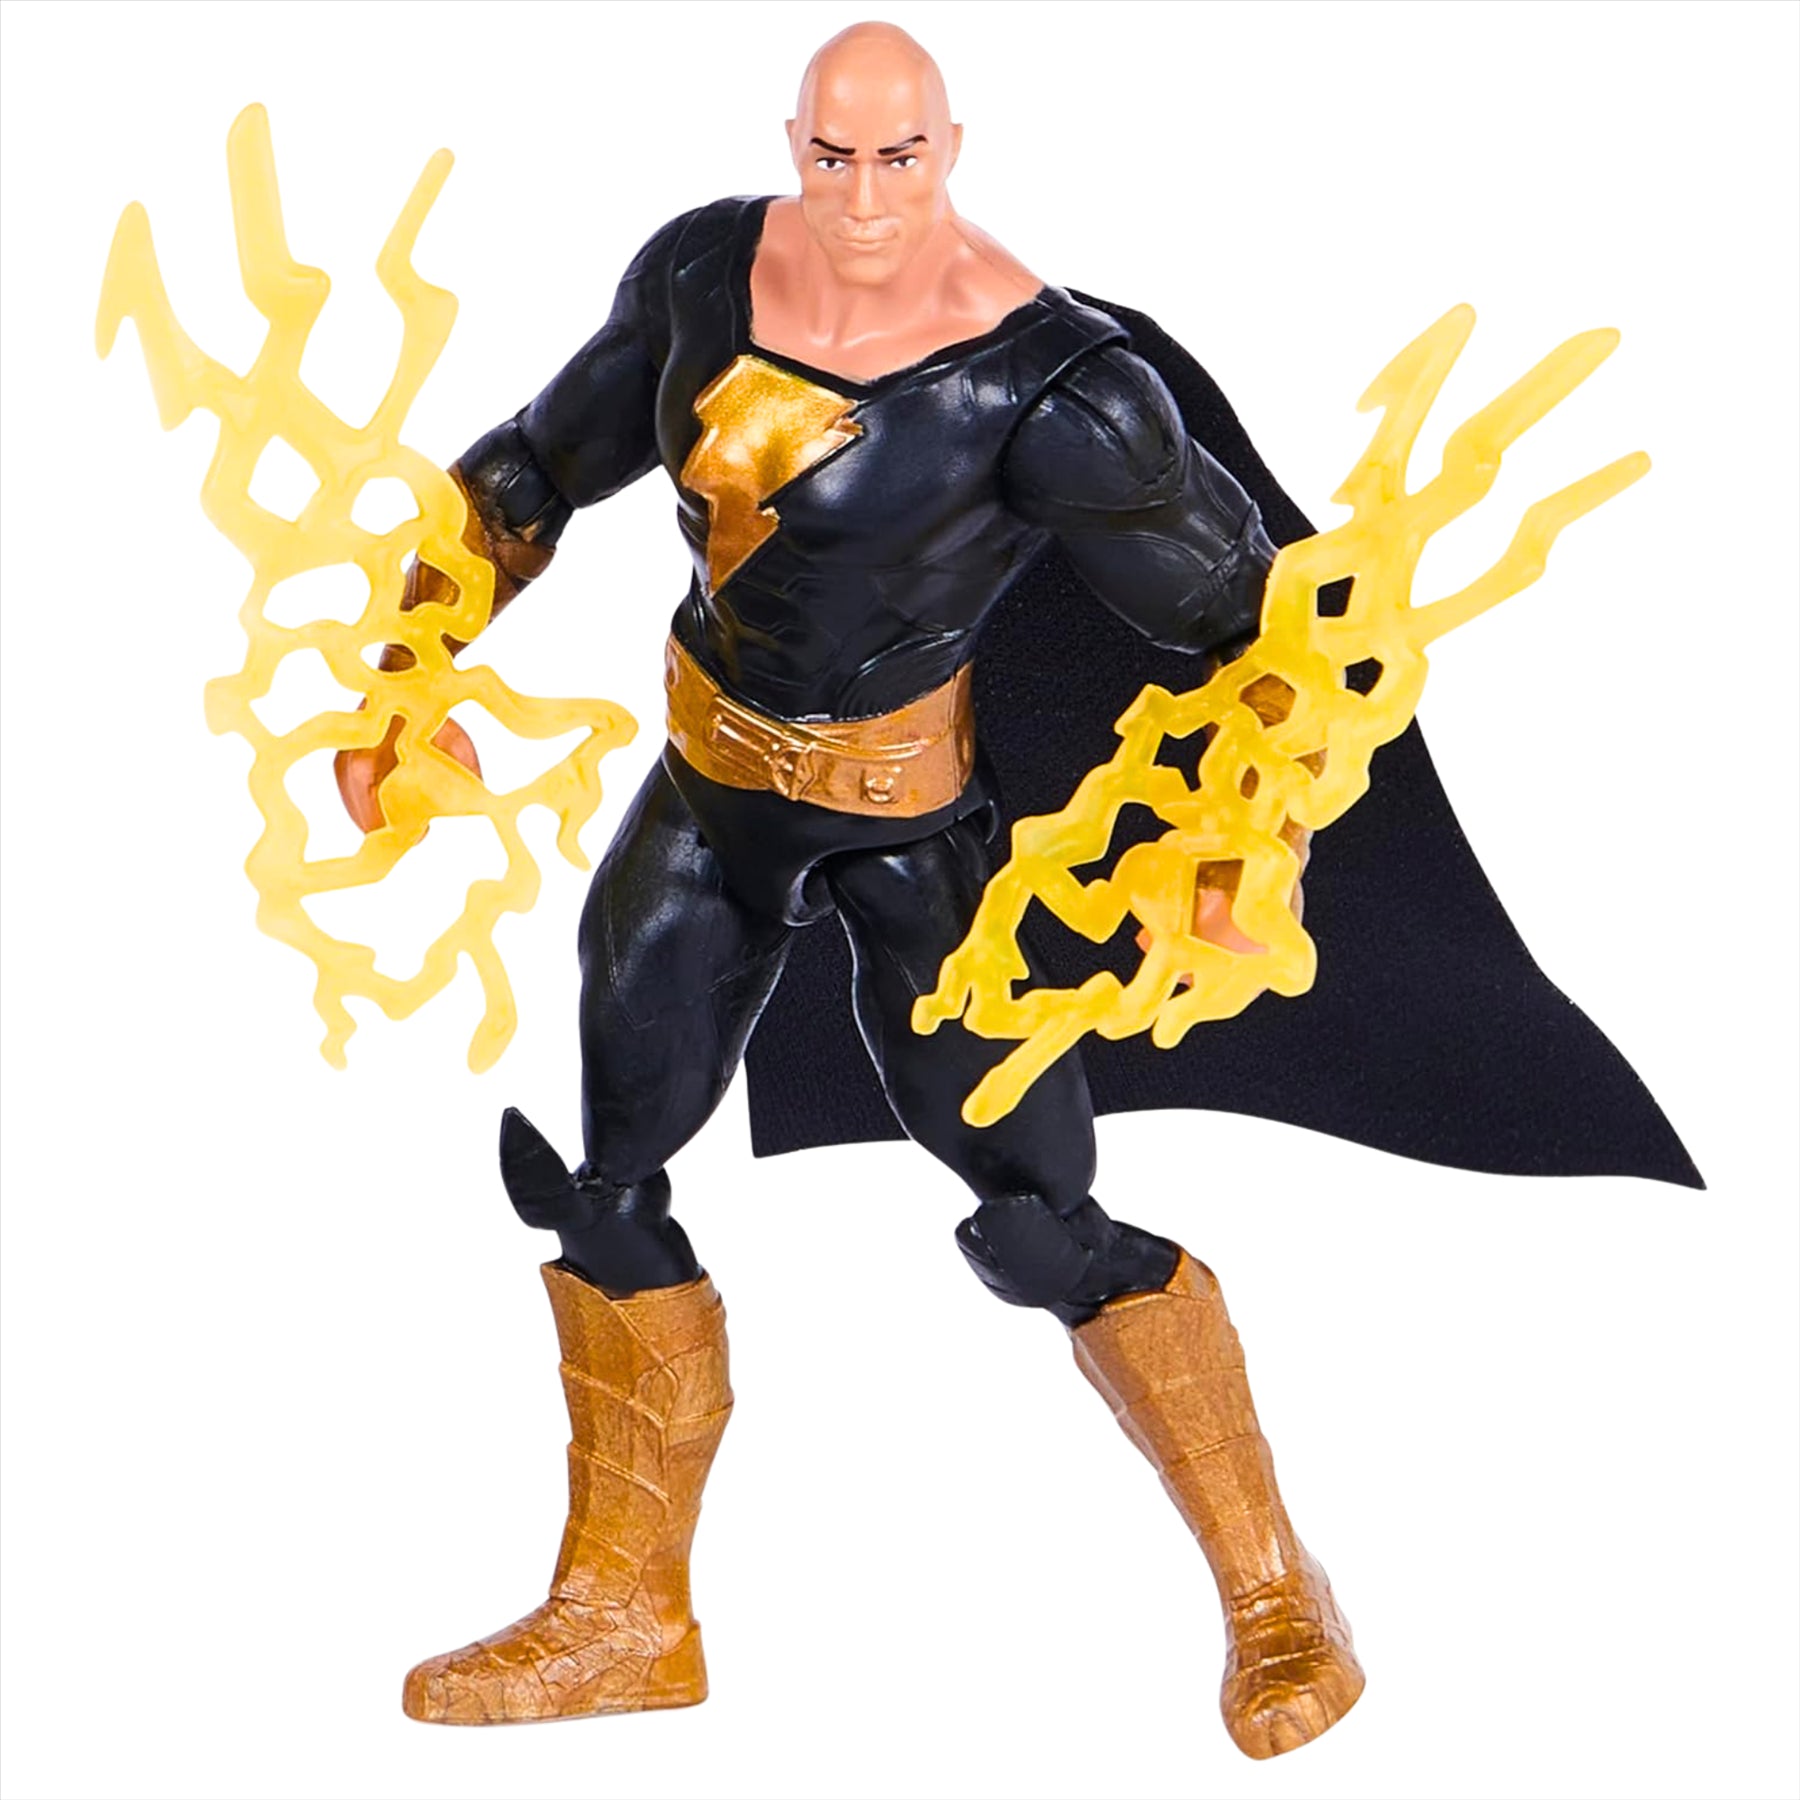 DC Comics Black Adam Movie Collectible Black Adam 10cm Articulated Action Figure with Accessories - Toptoys2u